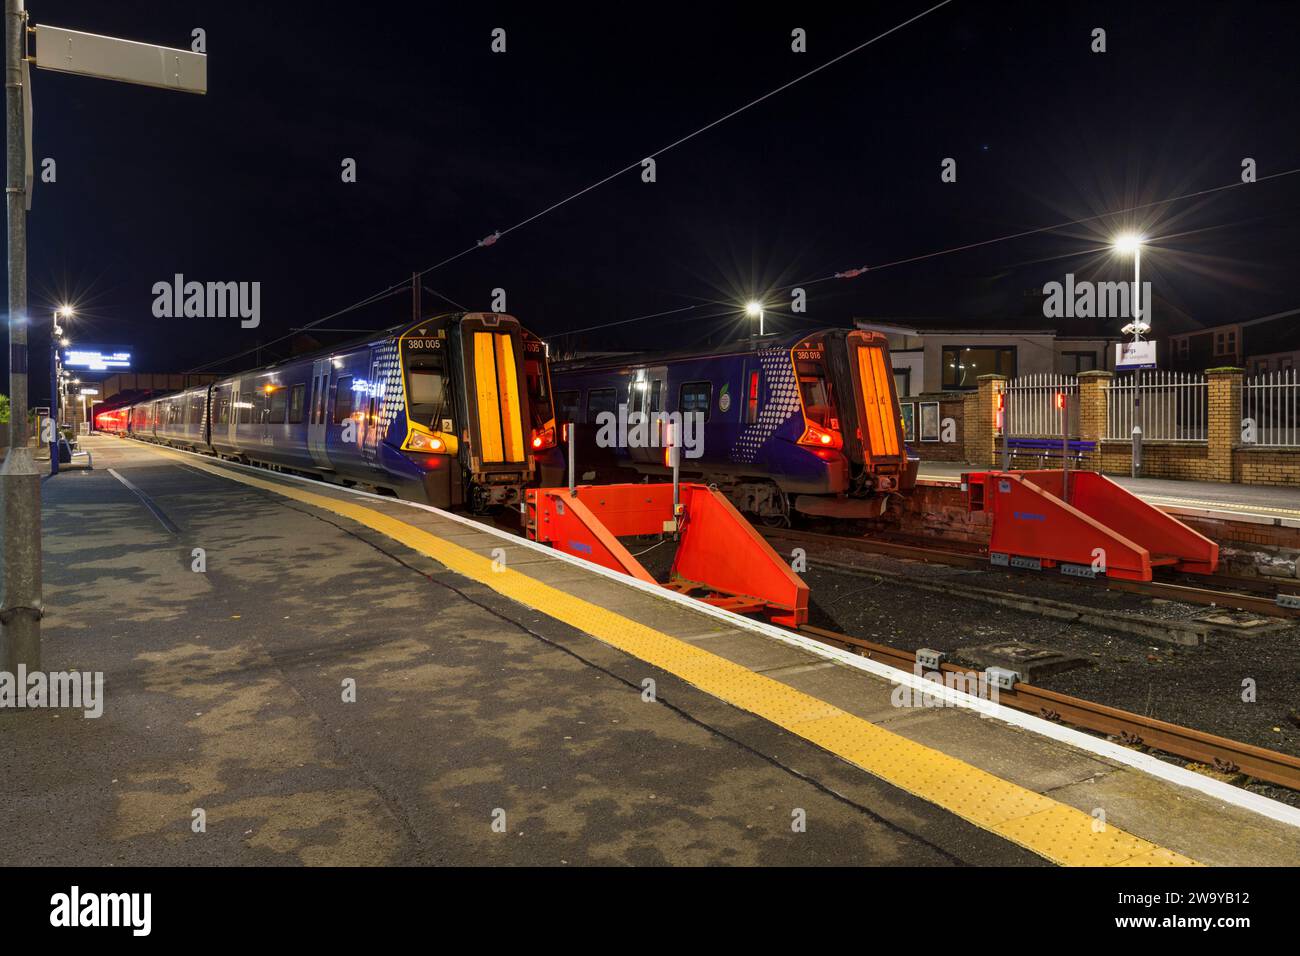 Scotrail Siemens class 380 electric multiple unit trains at Largs railway station, Ayrshire, Scotland, UK Stock Photo